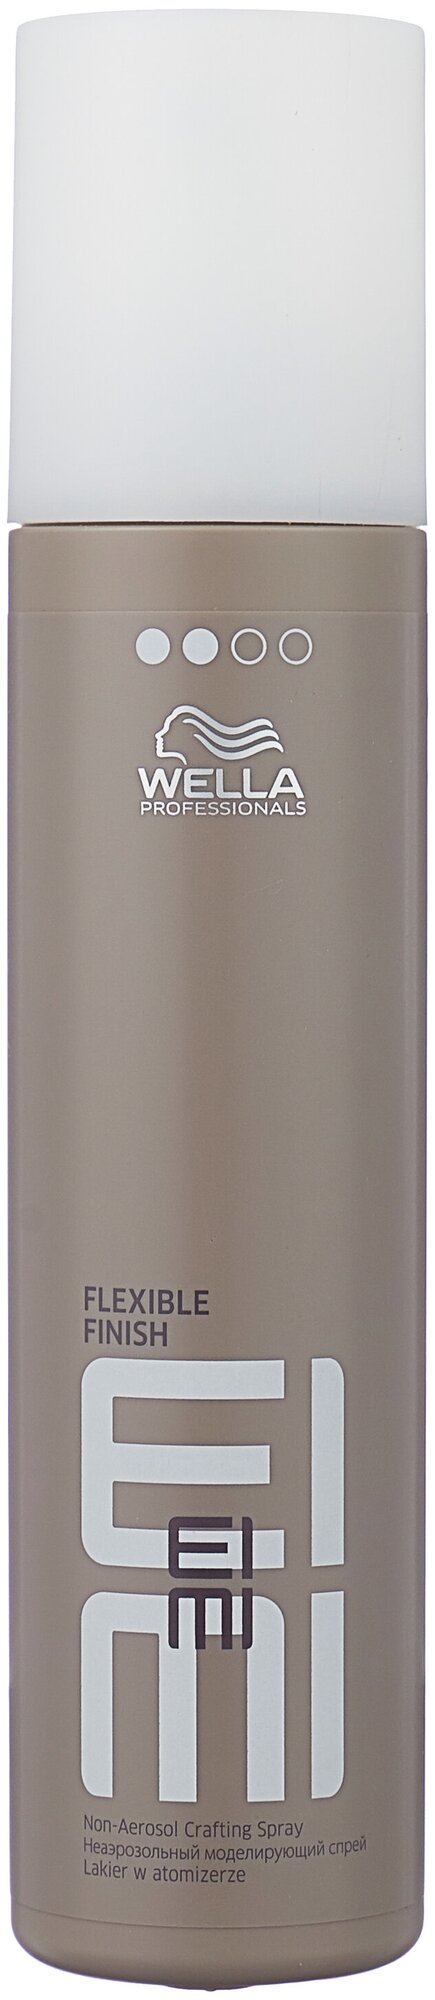 Wella Professionals Неаэрозольный спрей для укладки волос Eimi Flexible finish, средняя фиксация, 250 мл